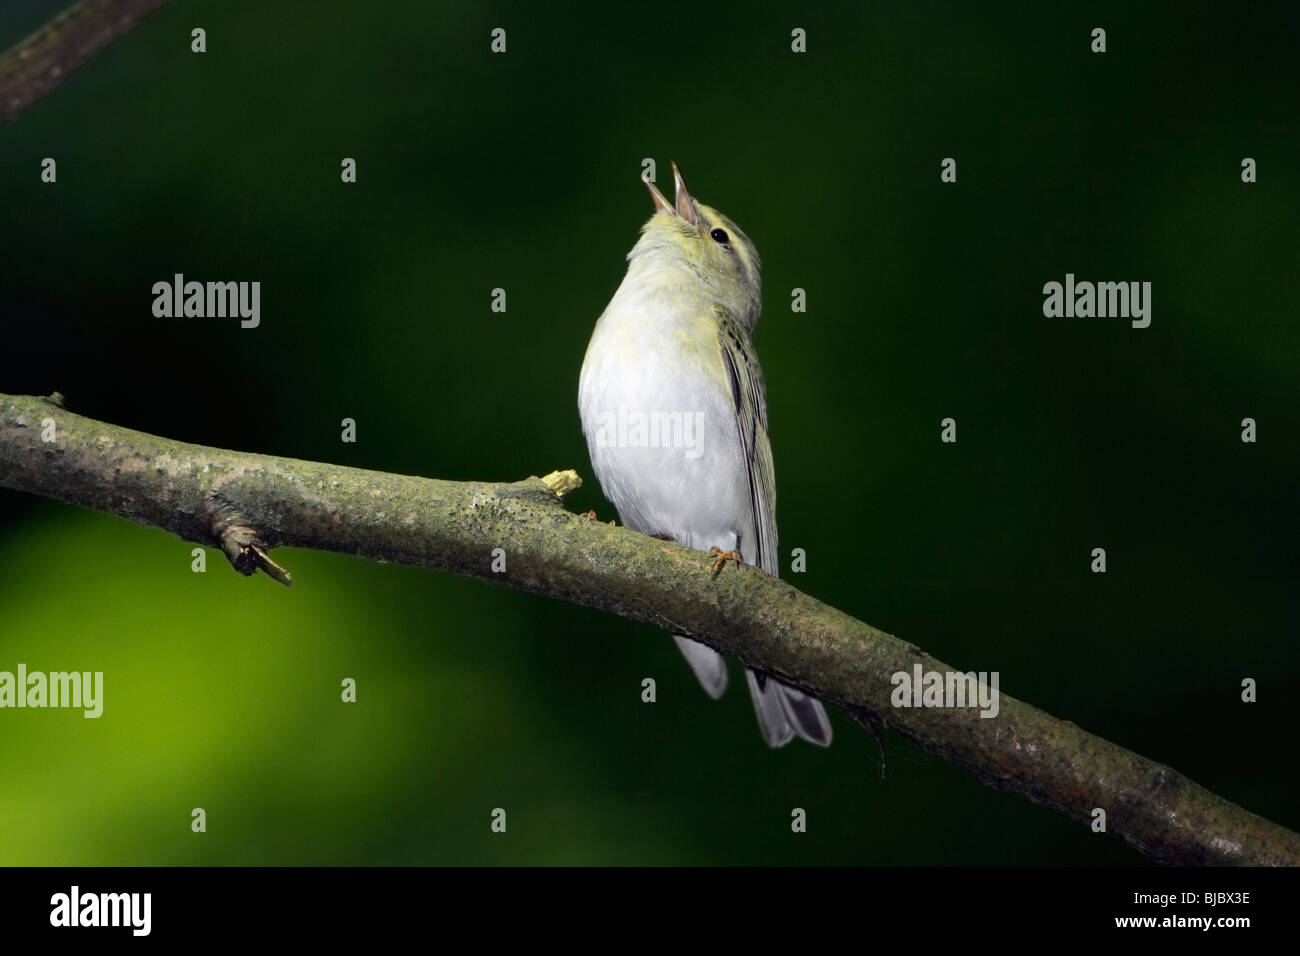 Wood Warbler (Phylloscopus sibilatrix), singing from branch Stock Photo